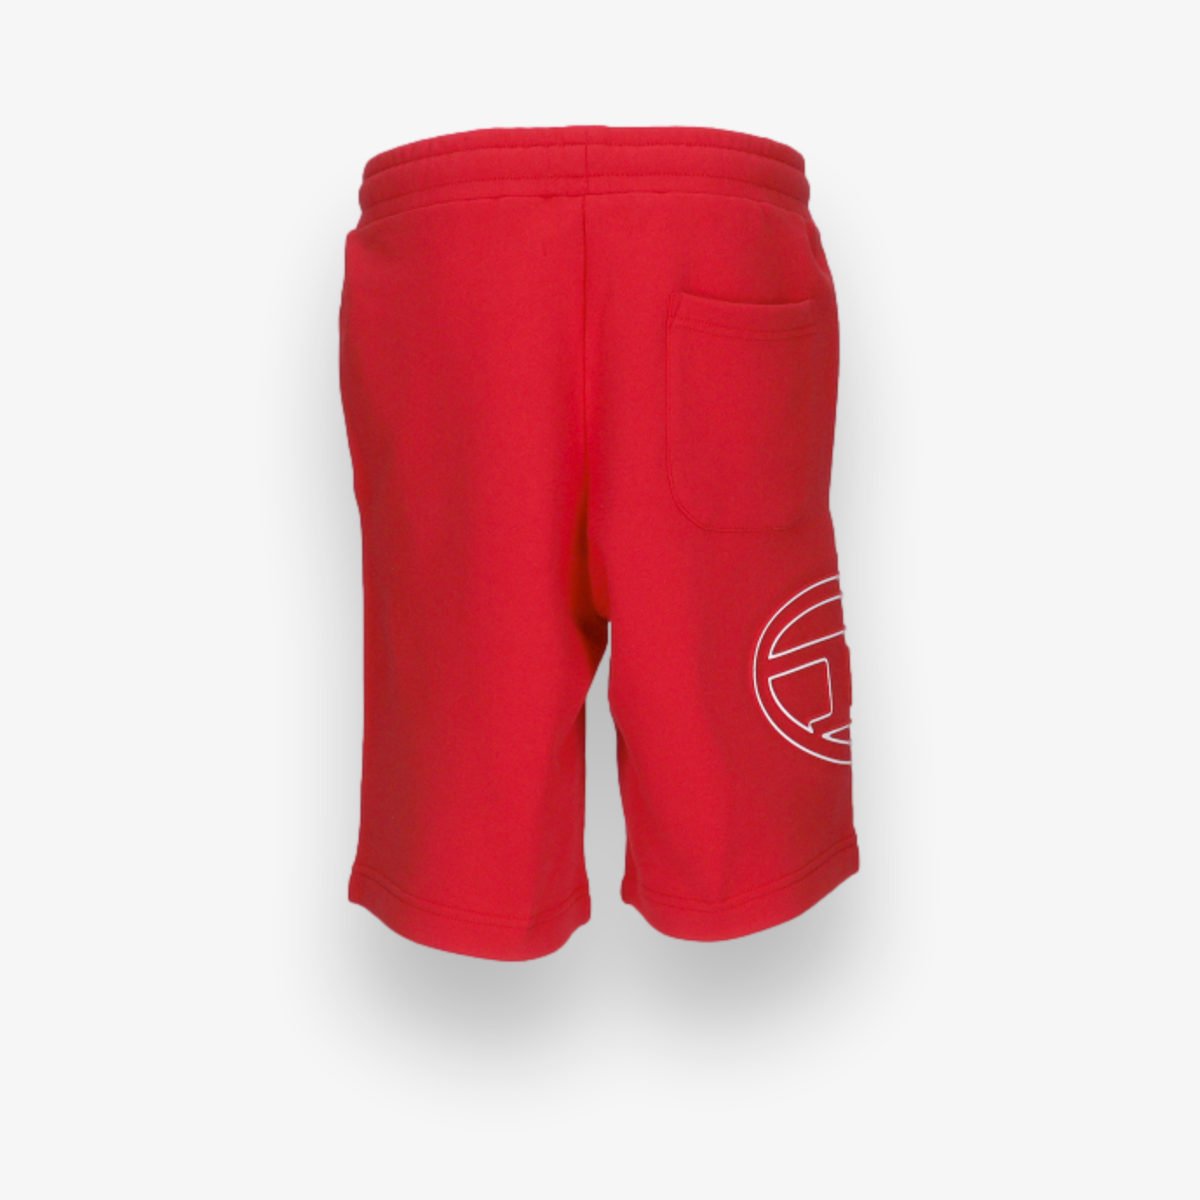 Fleece Shorts With Oval D Logo